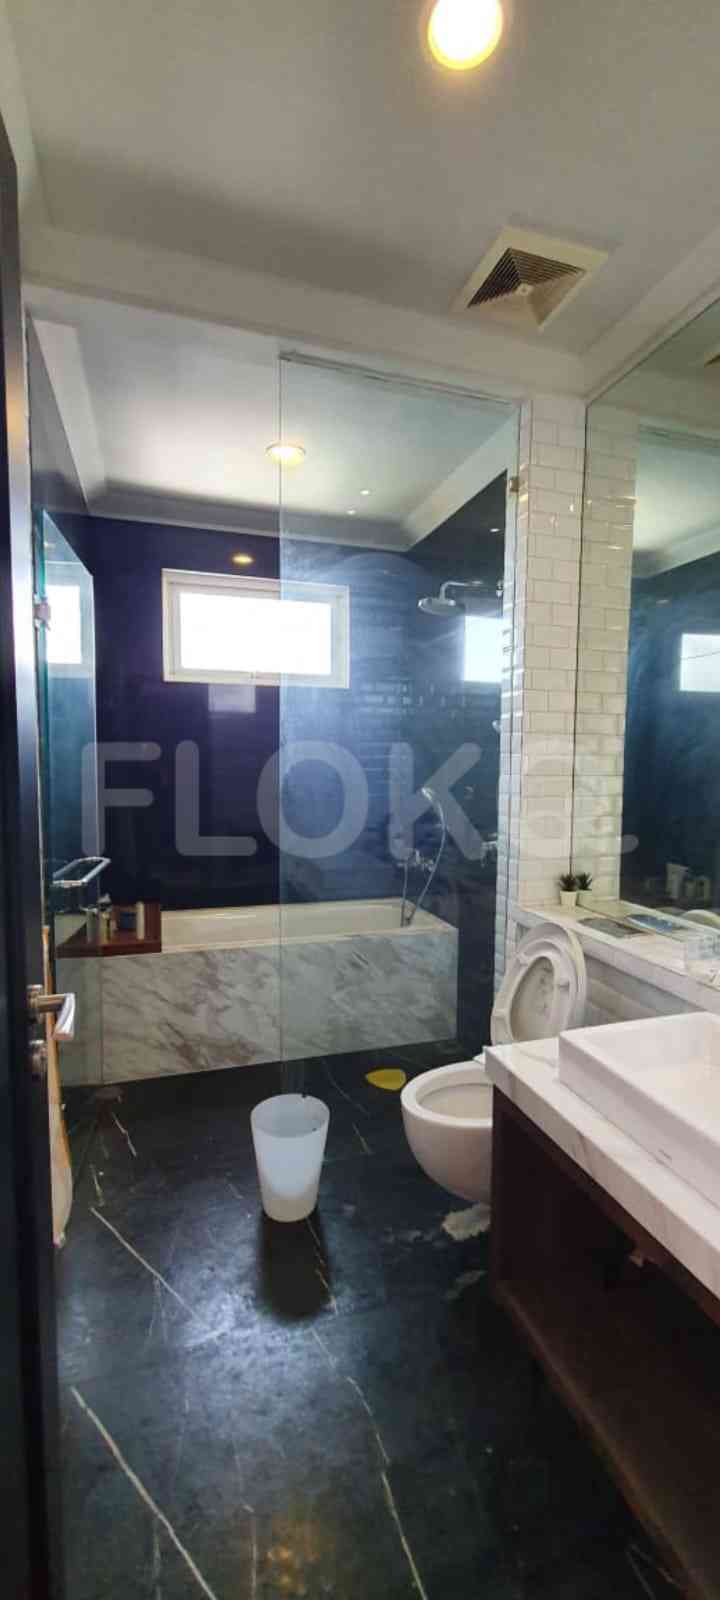 4 Bedroom on 19th Floor for Rent in Pondok Indah Residence - fpo353 5